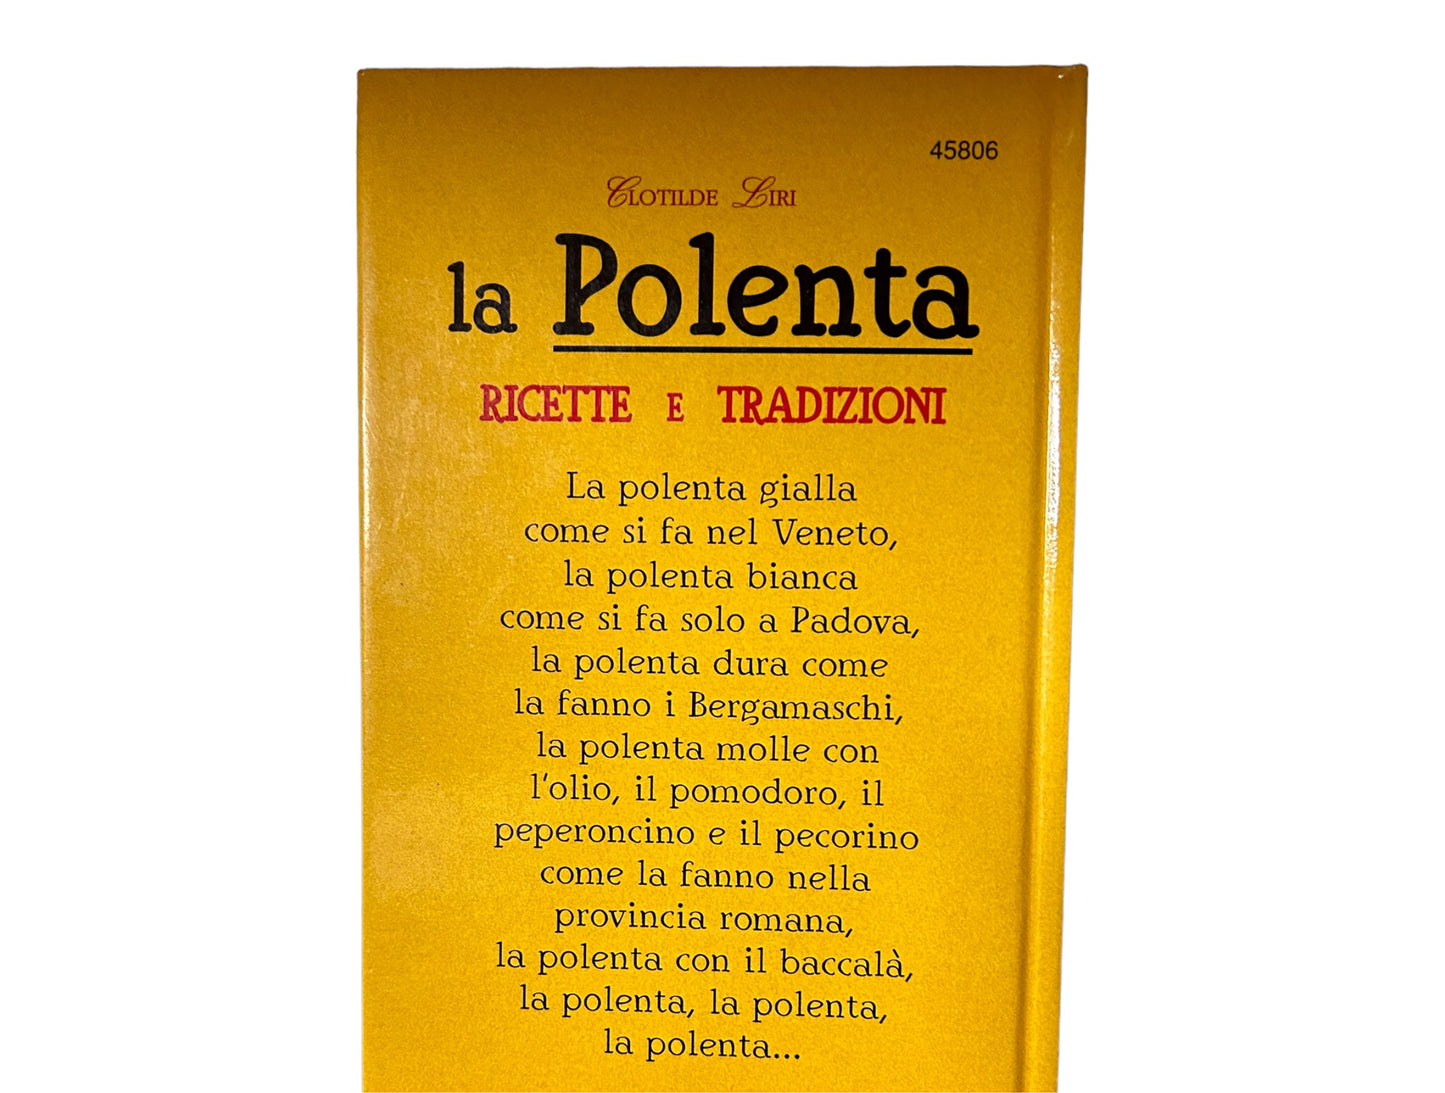 Polenta. Recipes and traditions